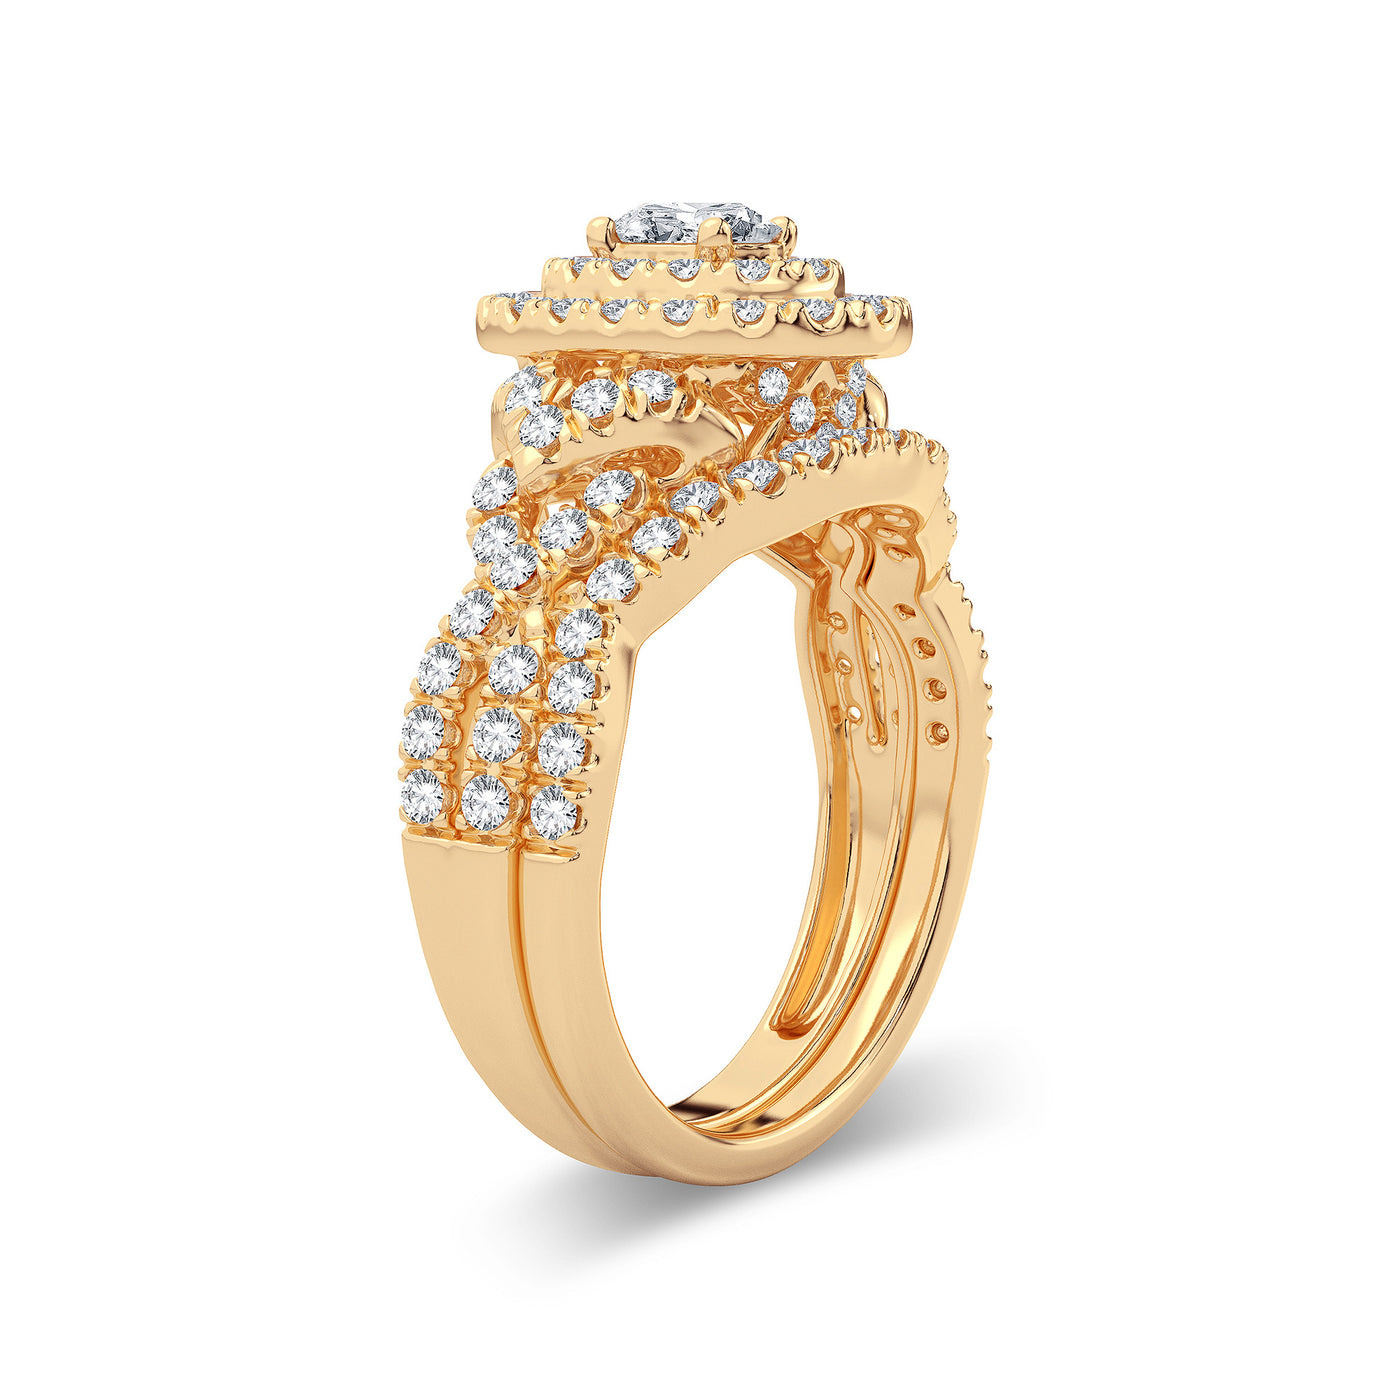 14K 1.82CT Diamond Bridal Ring